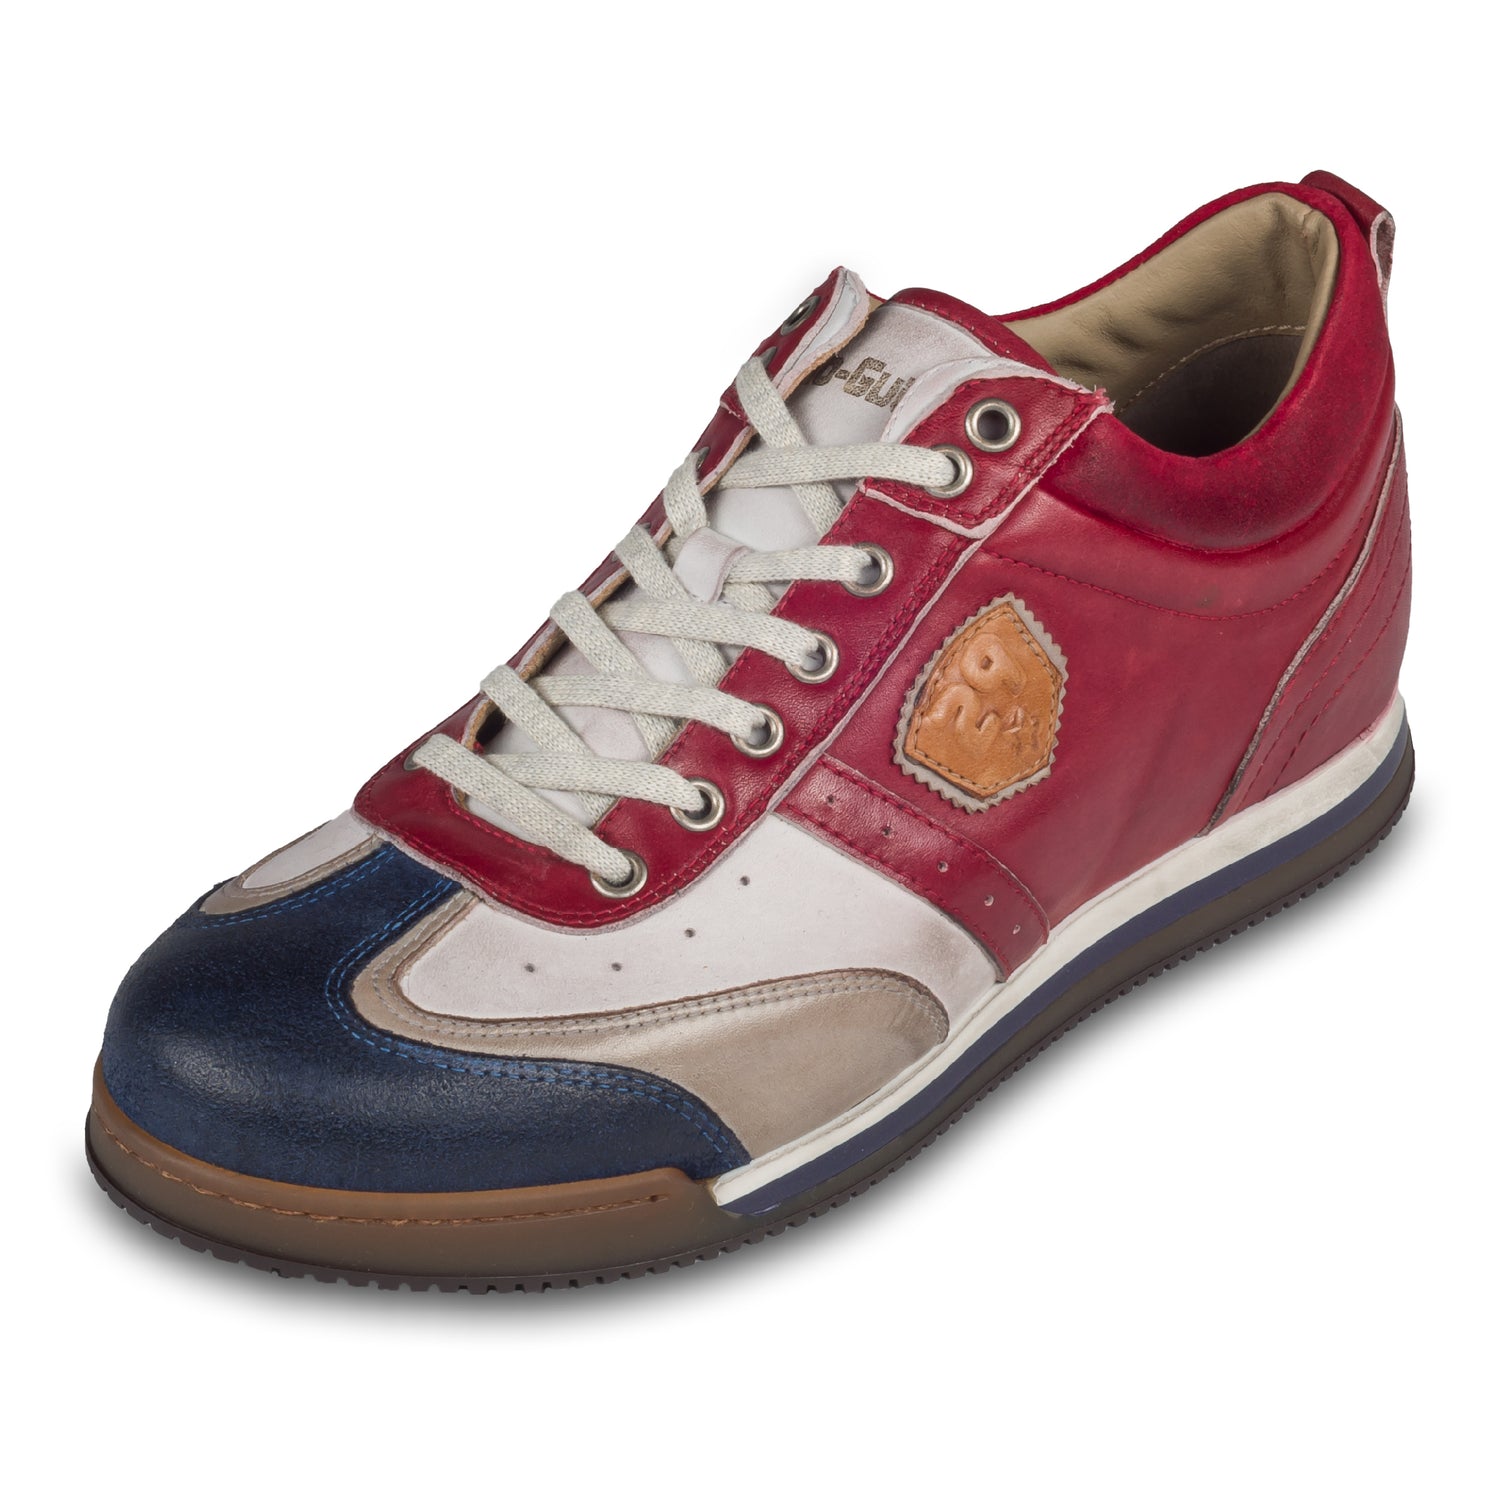 KAMO-GUTSU Herren Leder Sneaker rot / weiß / blau / grau, Retro-Optik. Modell SCUDO-005 rosso combi. Handgefertigt in Italien. Schräge Ansicht linker Schuh.